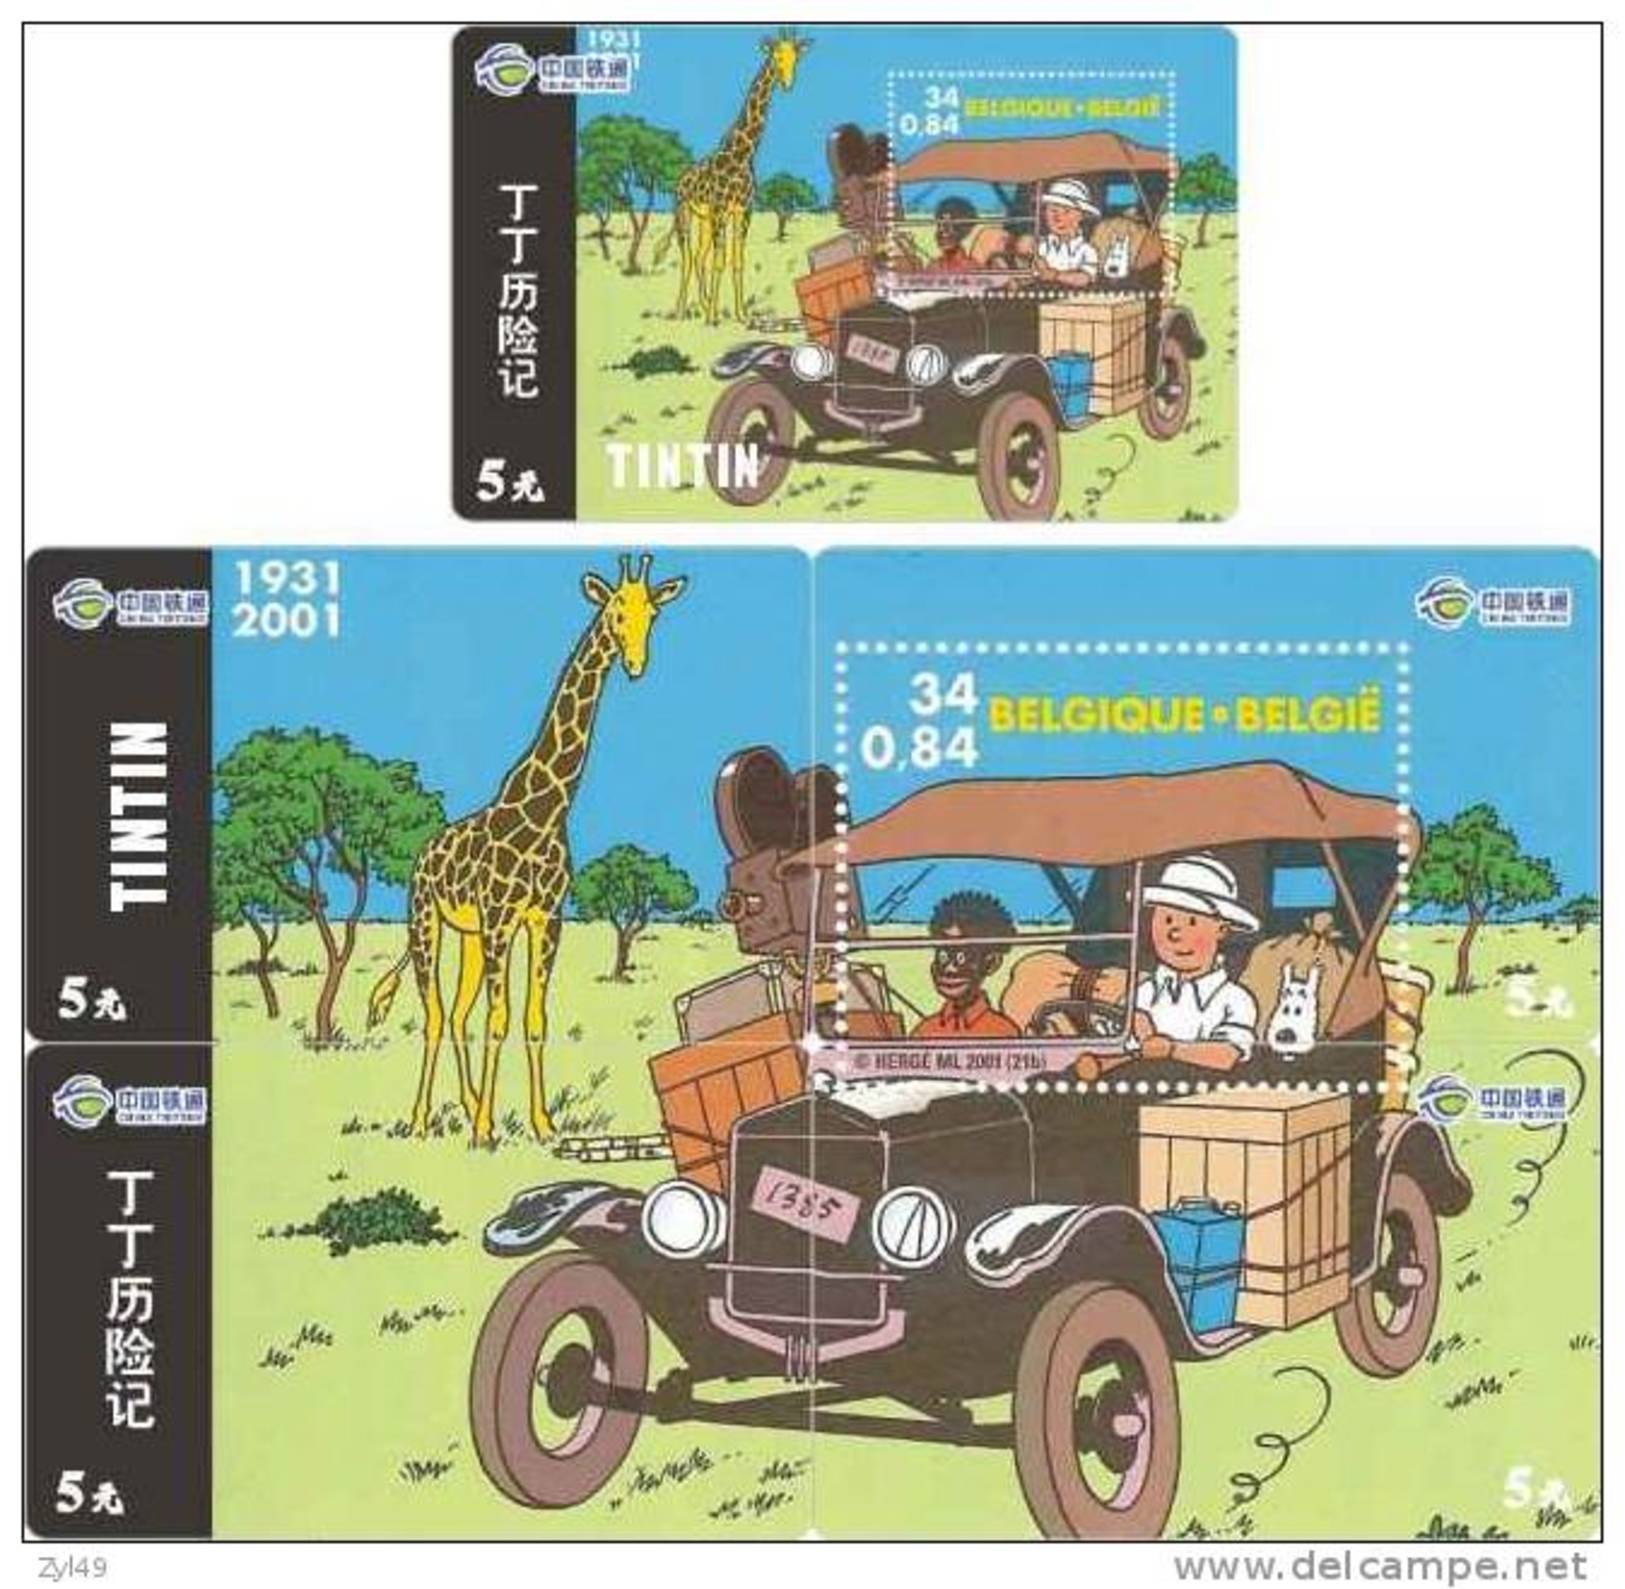 T04301 China Phone Cards Tintin Puzzle 5pcs - BD